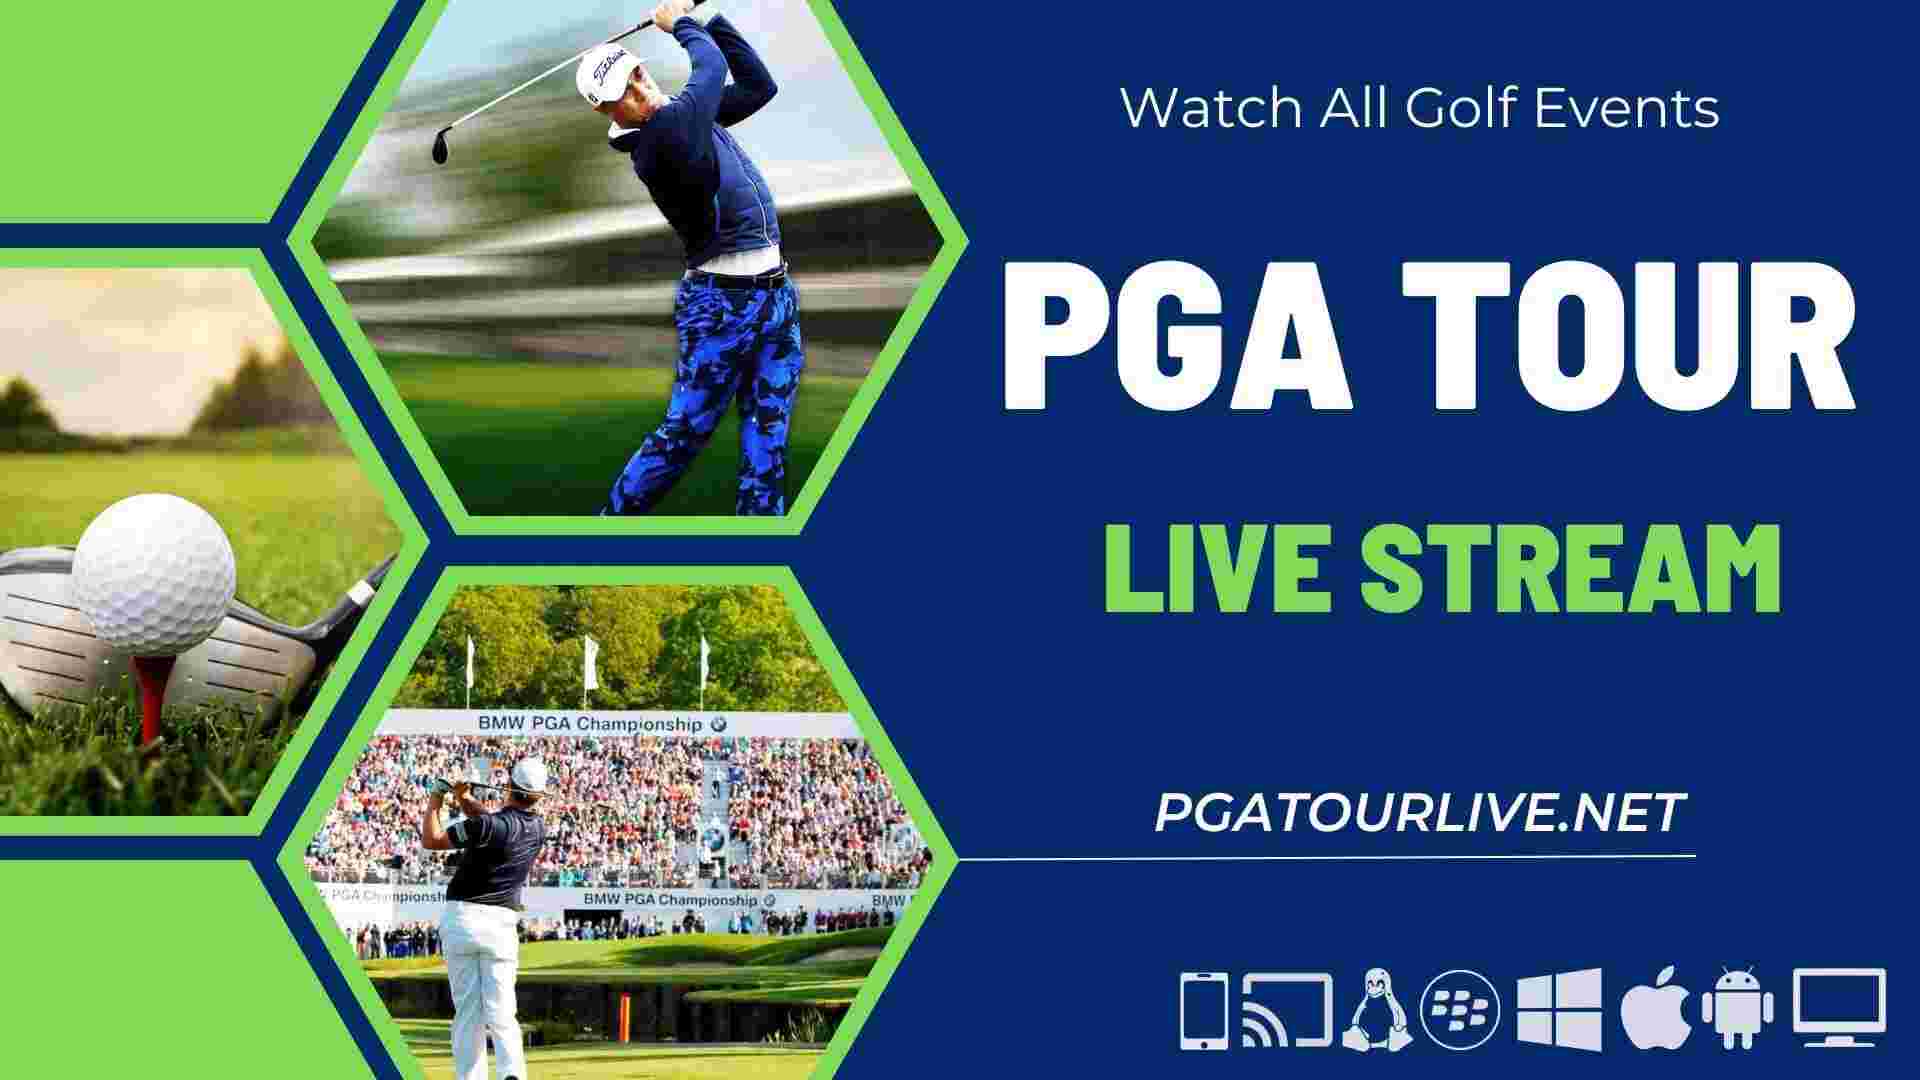 PGA Tour Live Stream Golf TV Channel